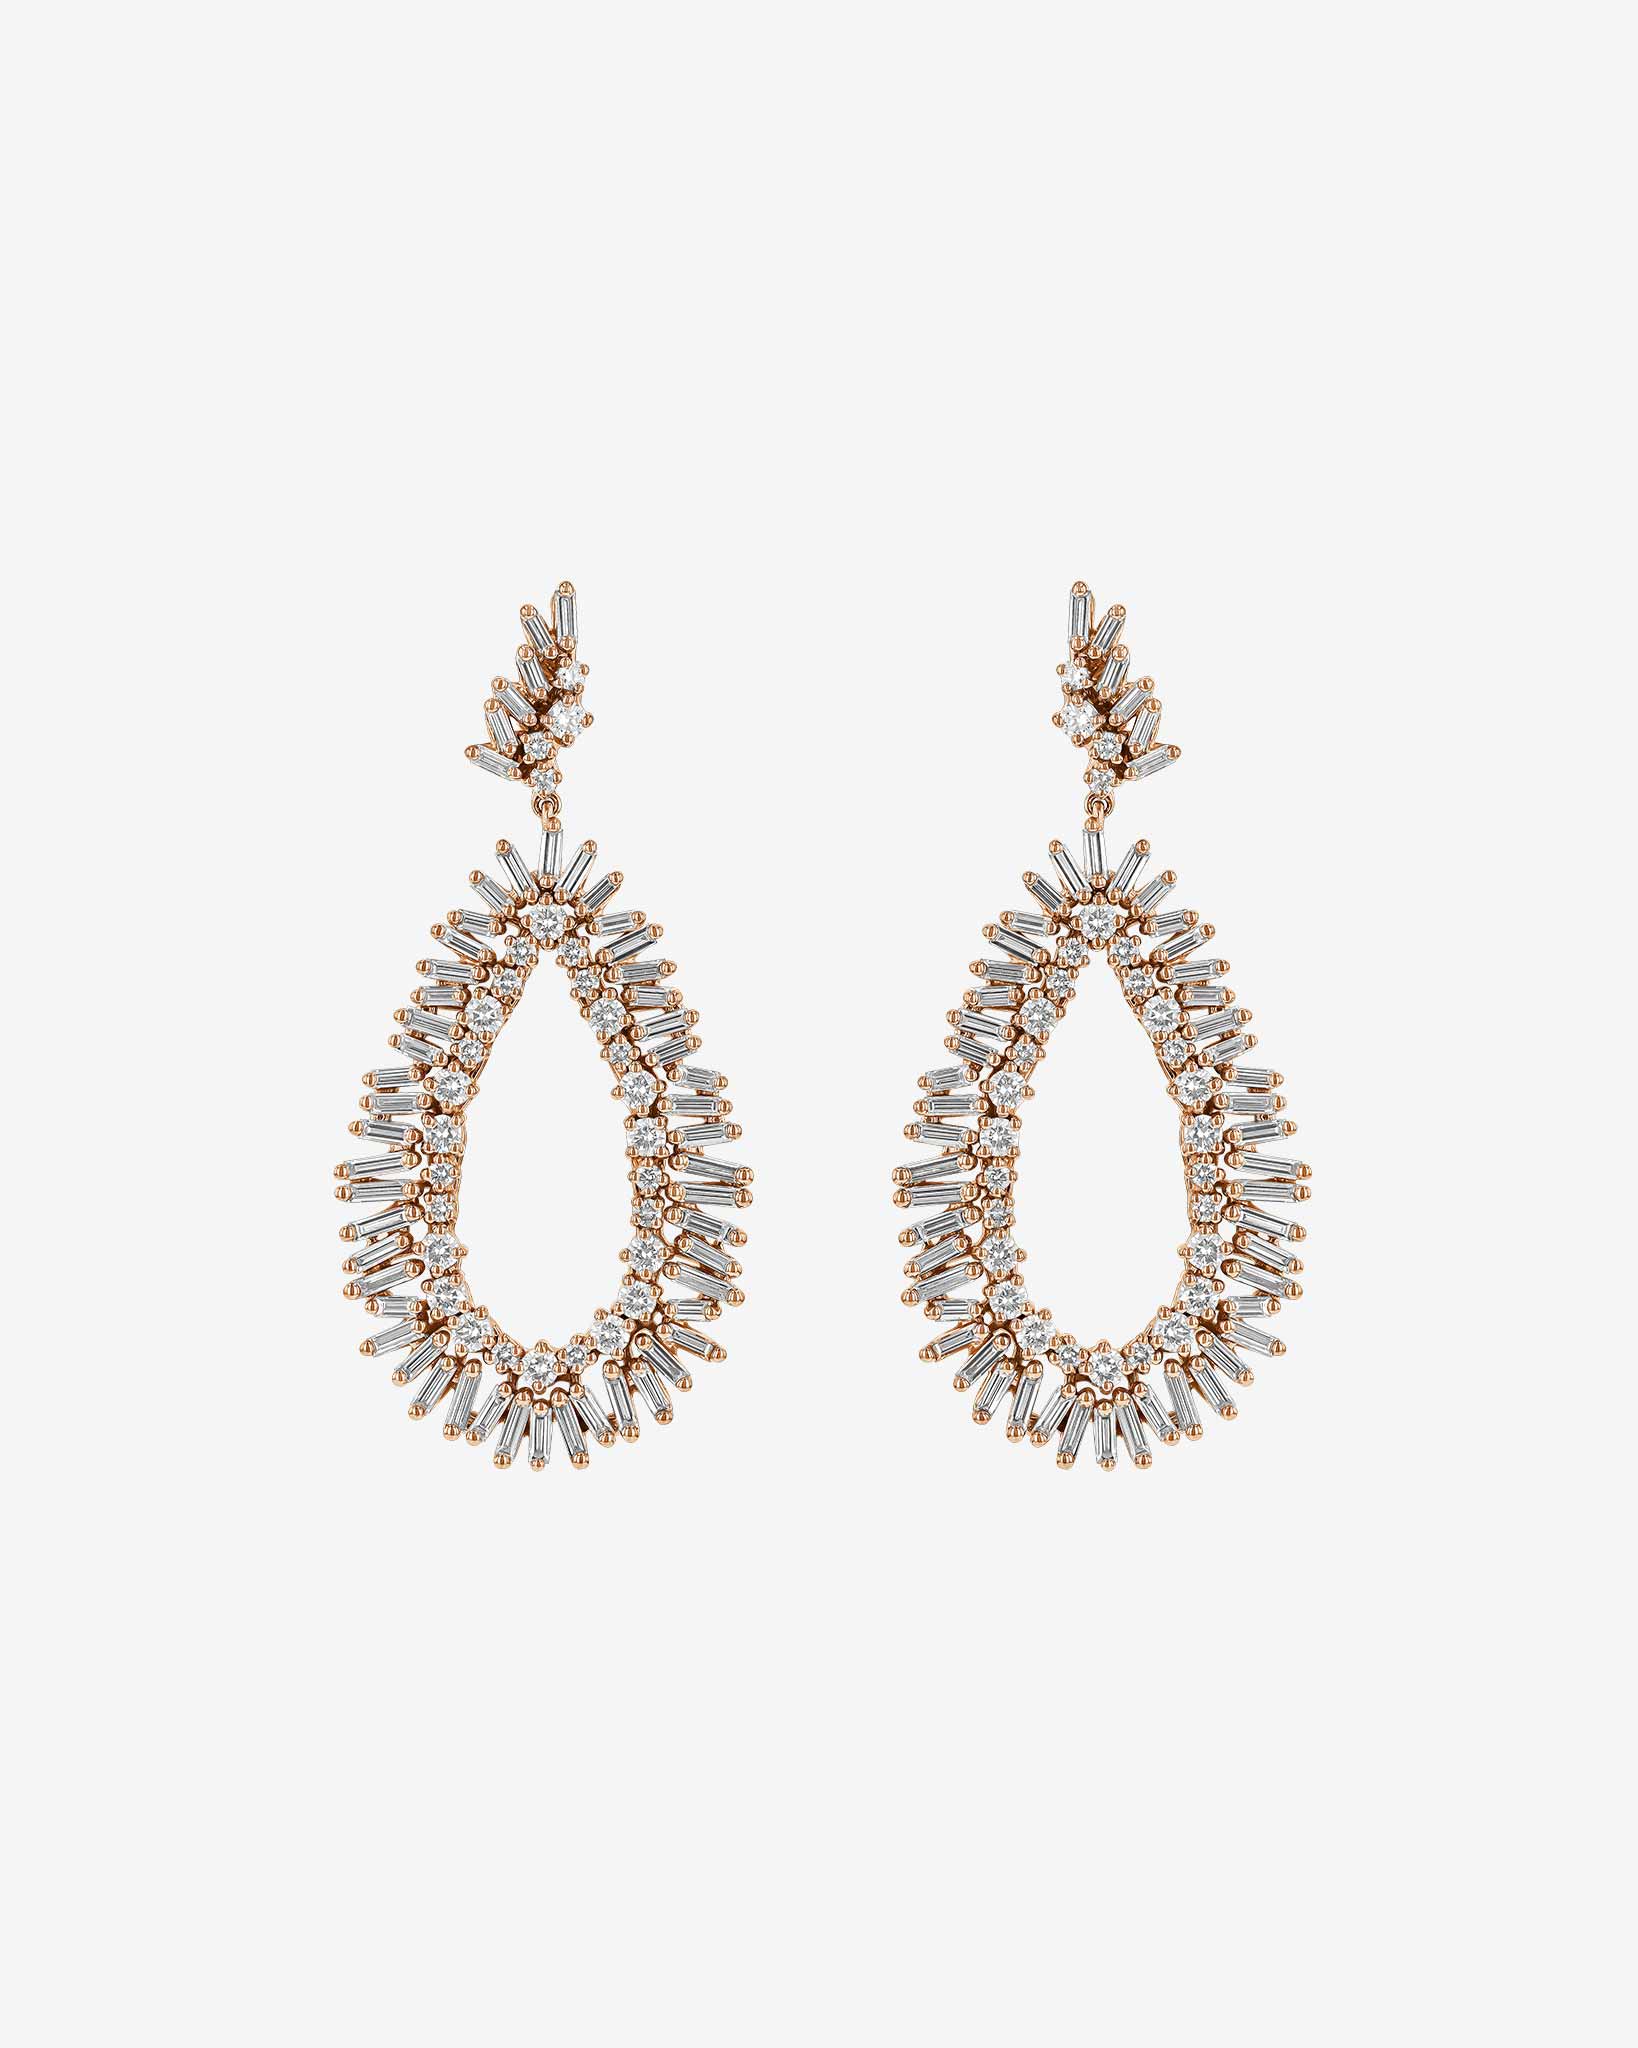 Suzanne Kalan Classic Diamond Midi Tear Drop Earrings in 18k rose gold